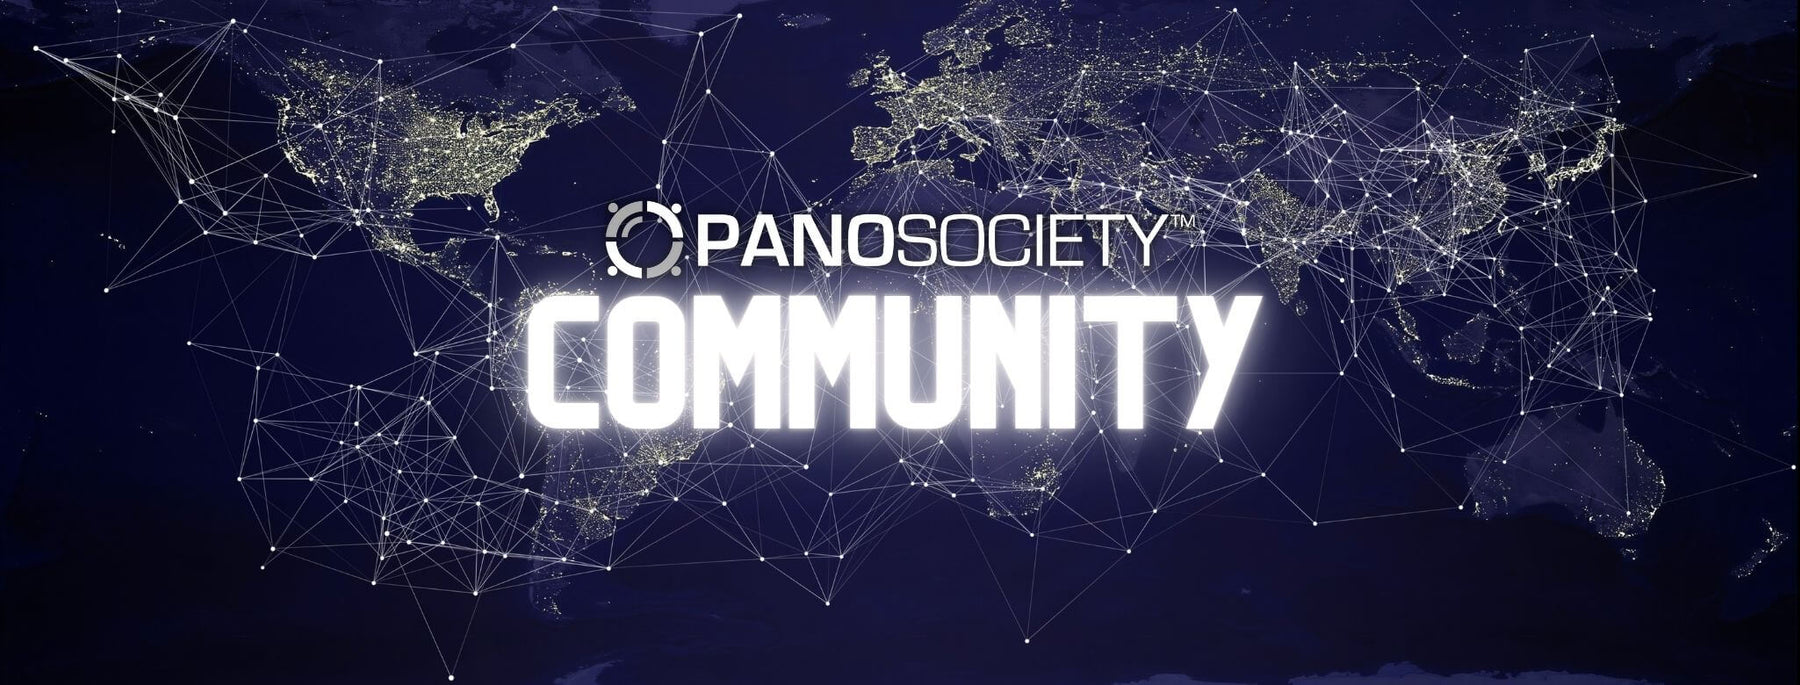 Introducing PanoSociety Community